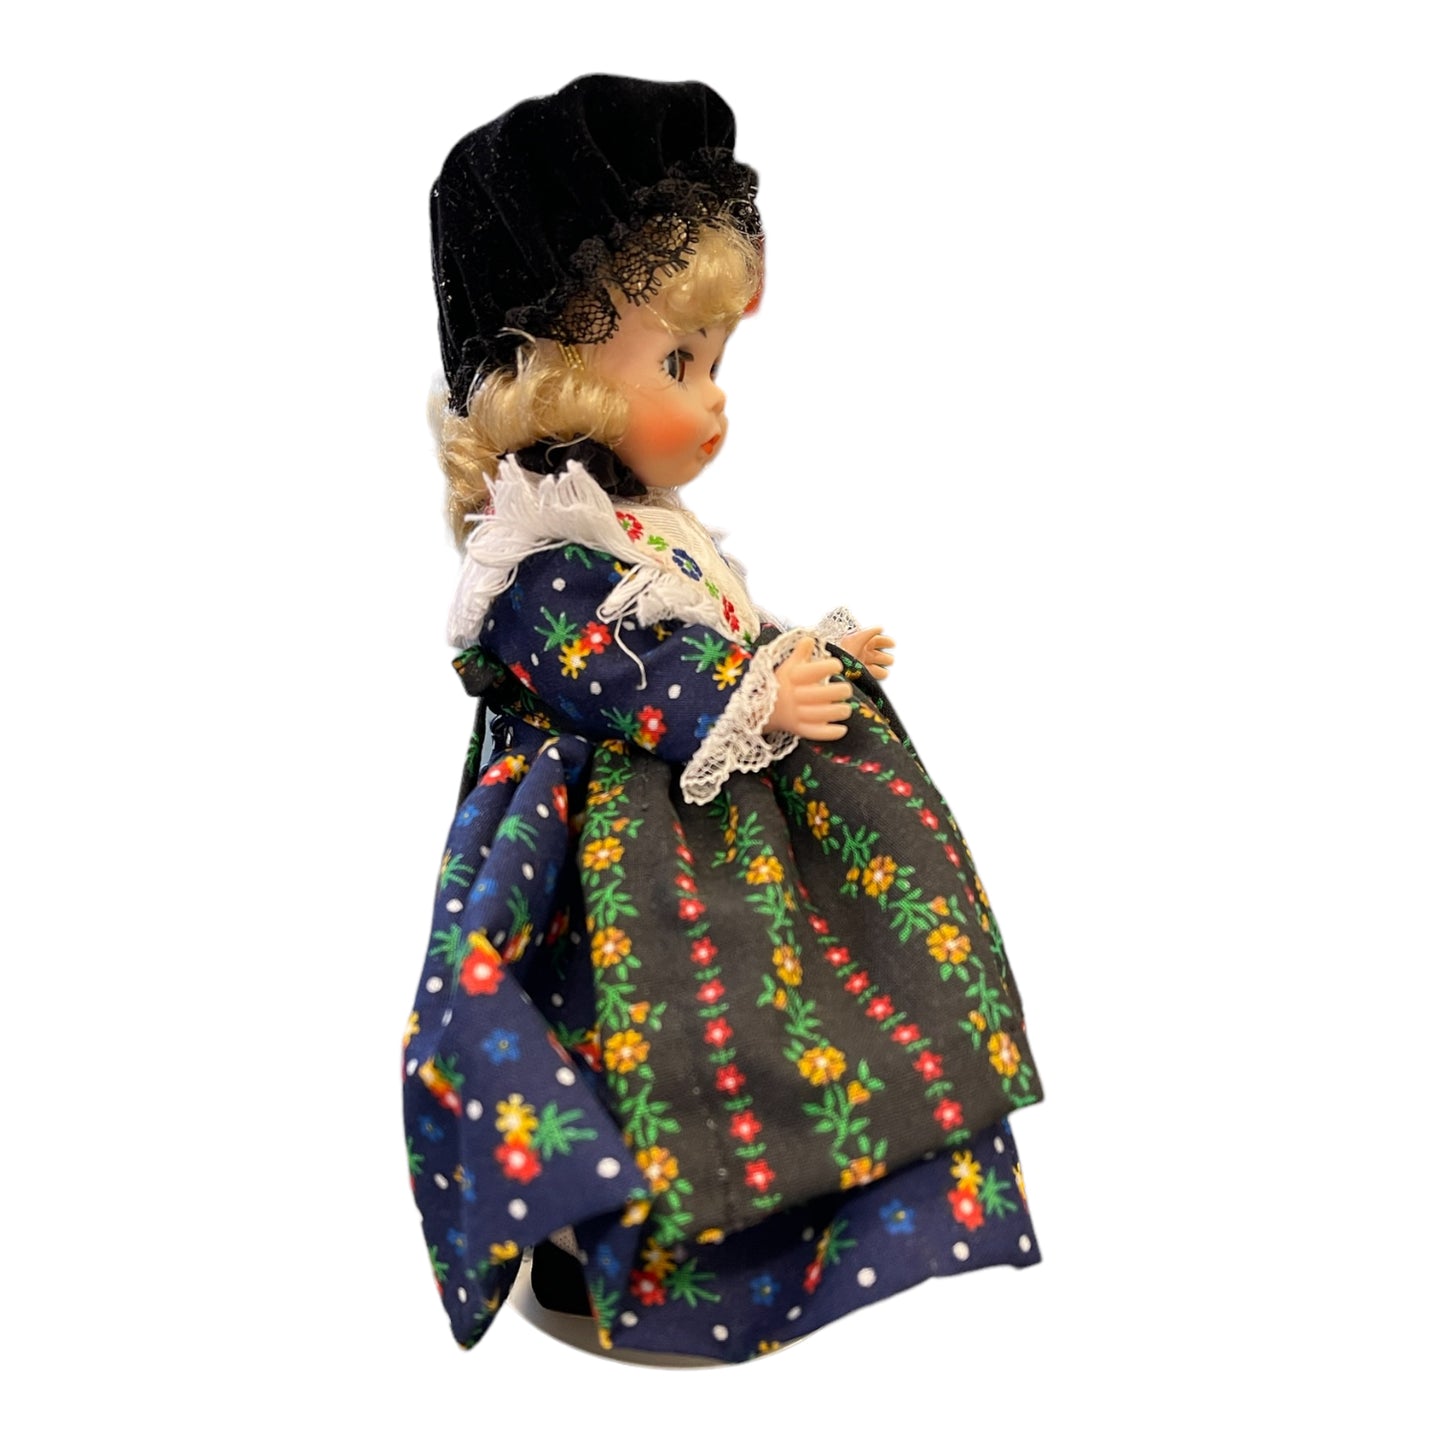 Madame Alexander Doll Germany Number 563